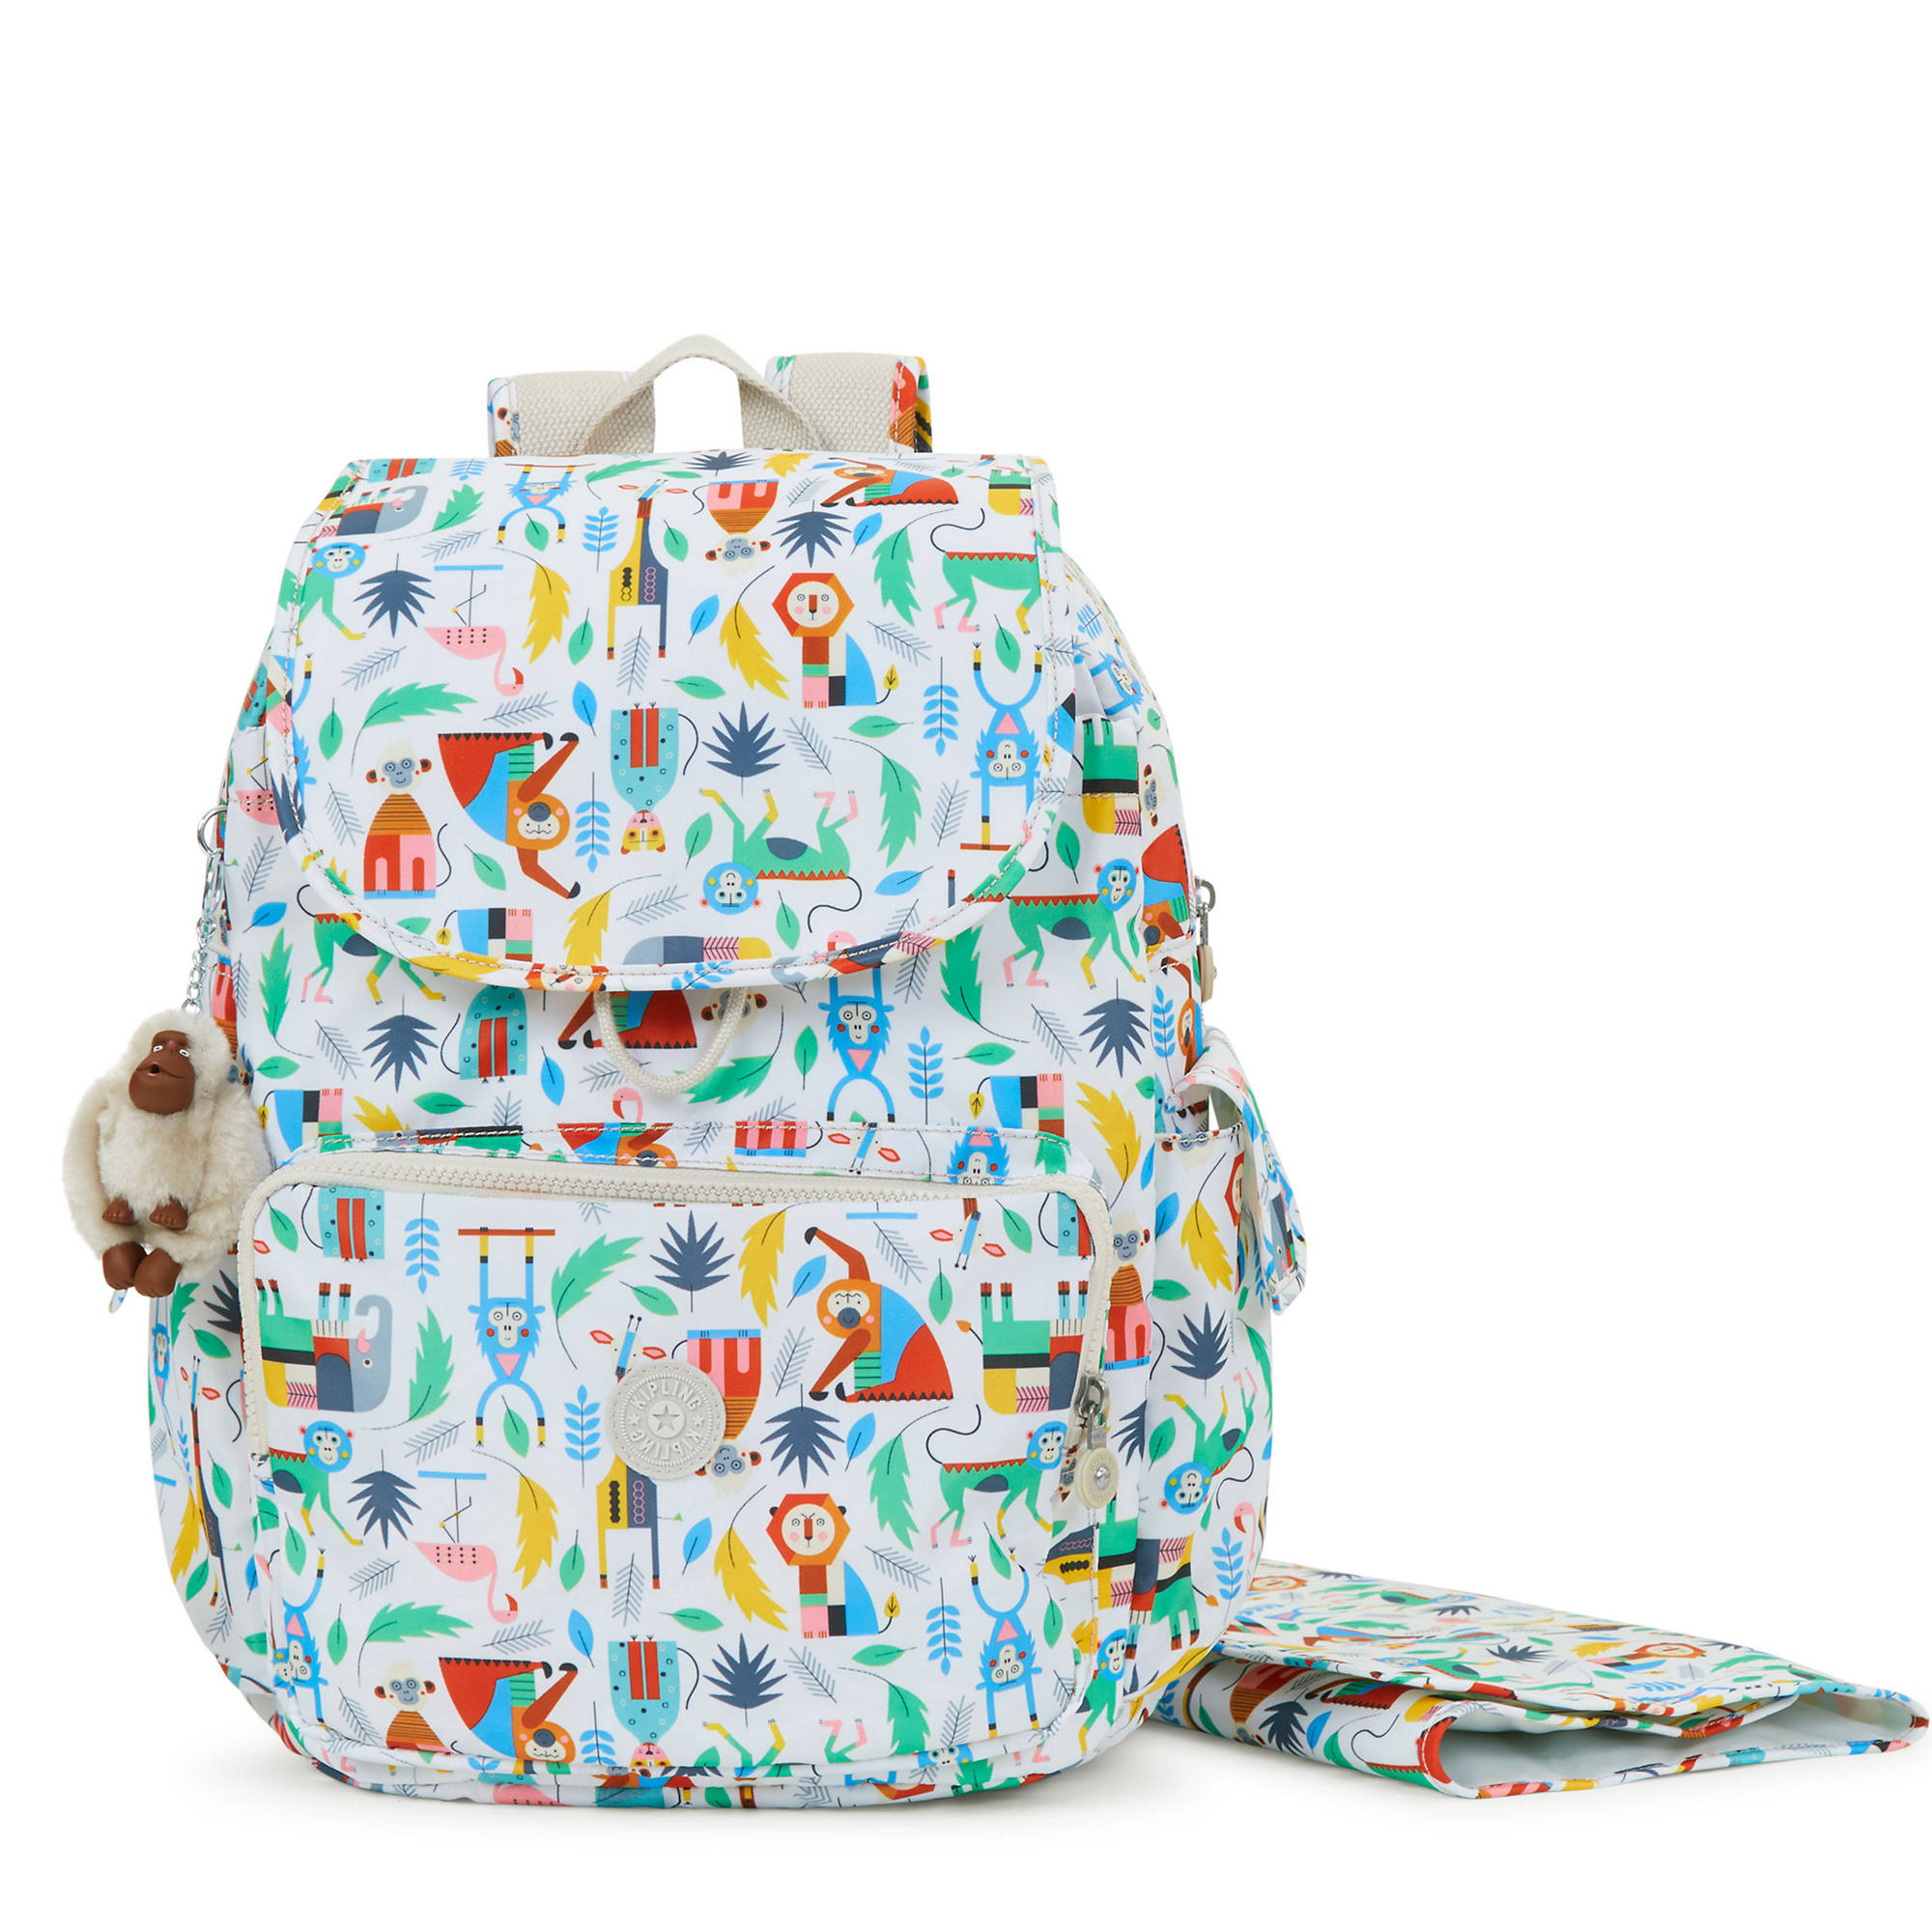 Kipling Zax Backpack Diaper Bag | eBay